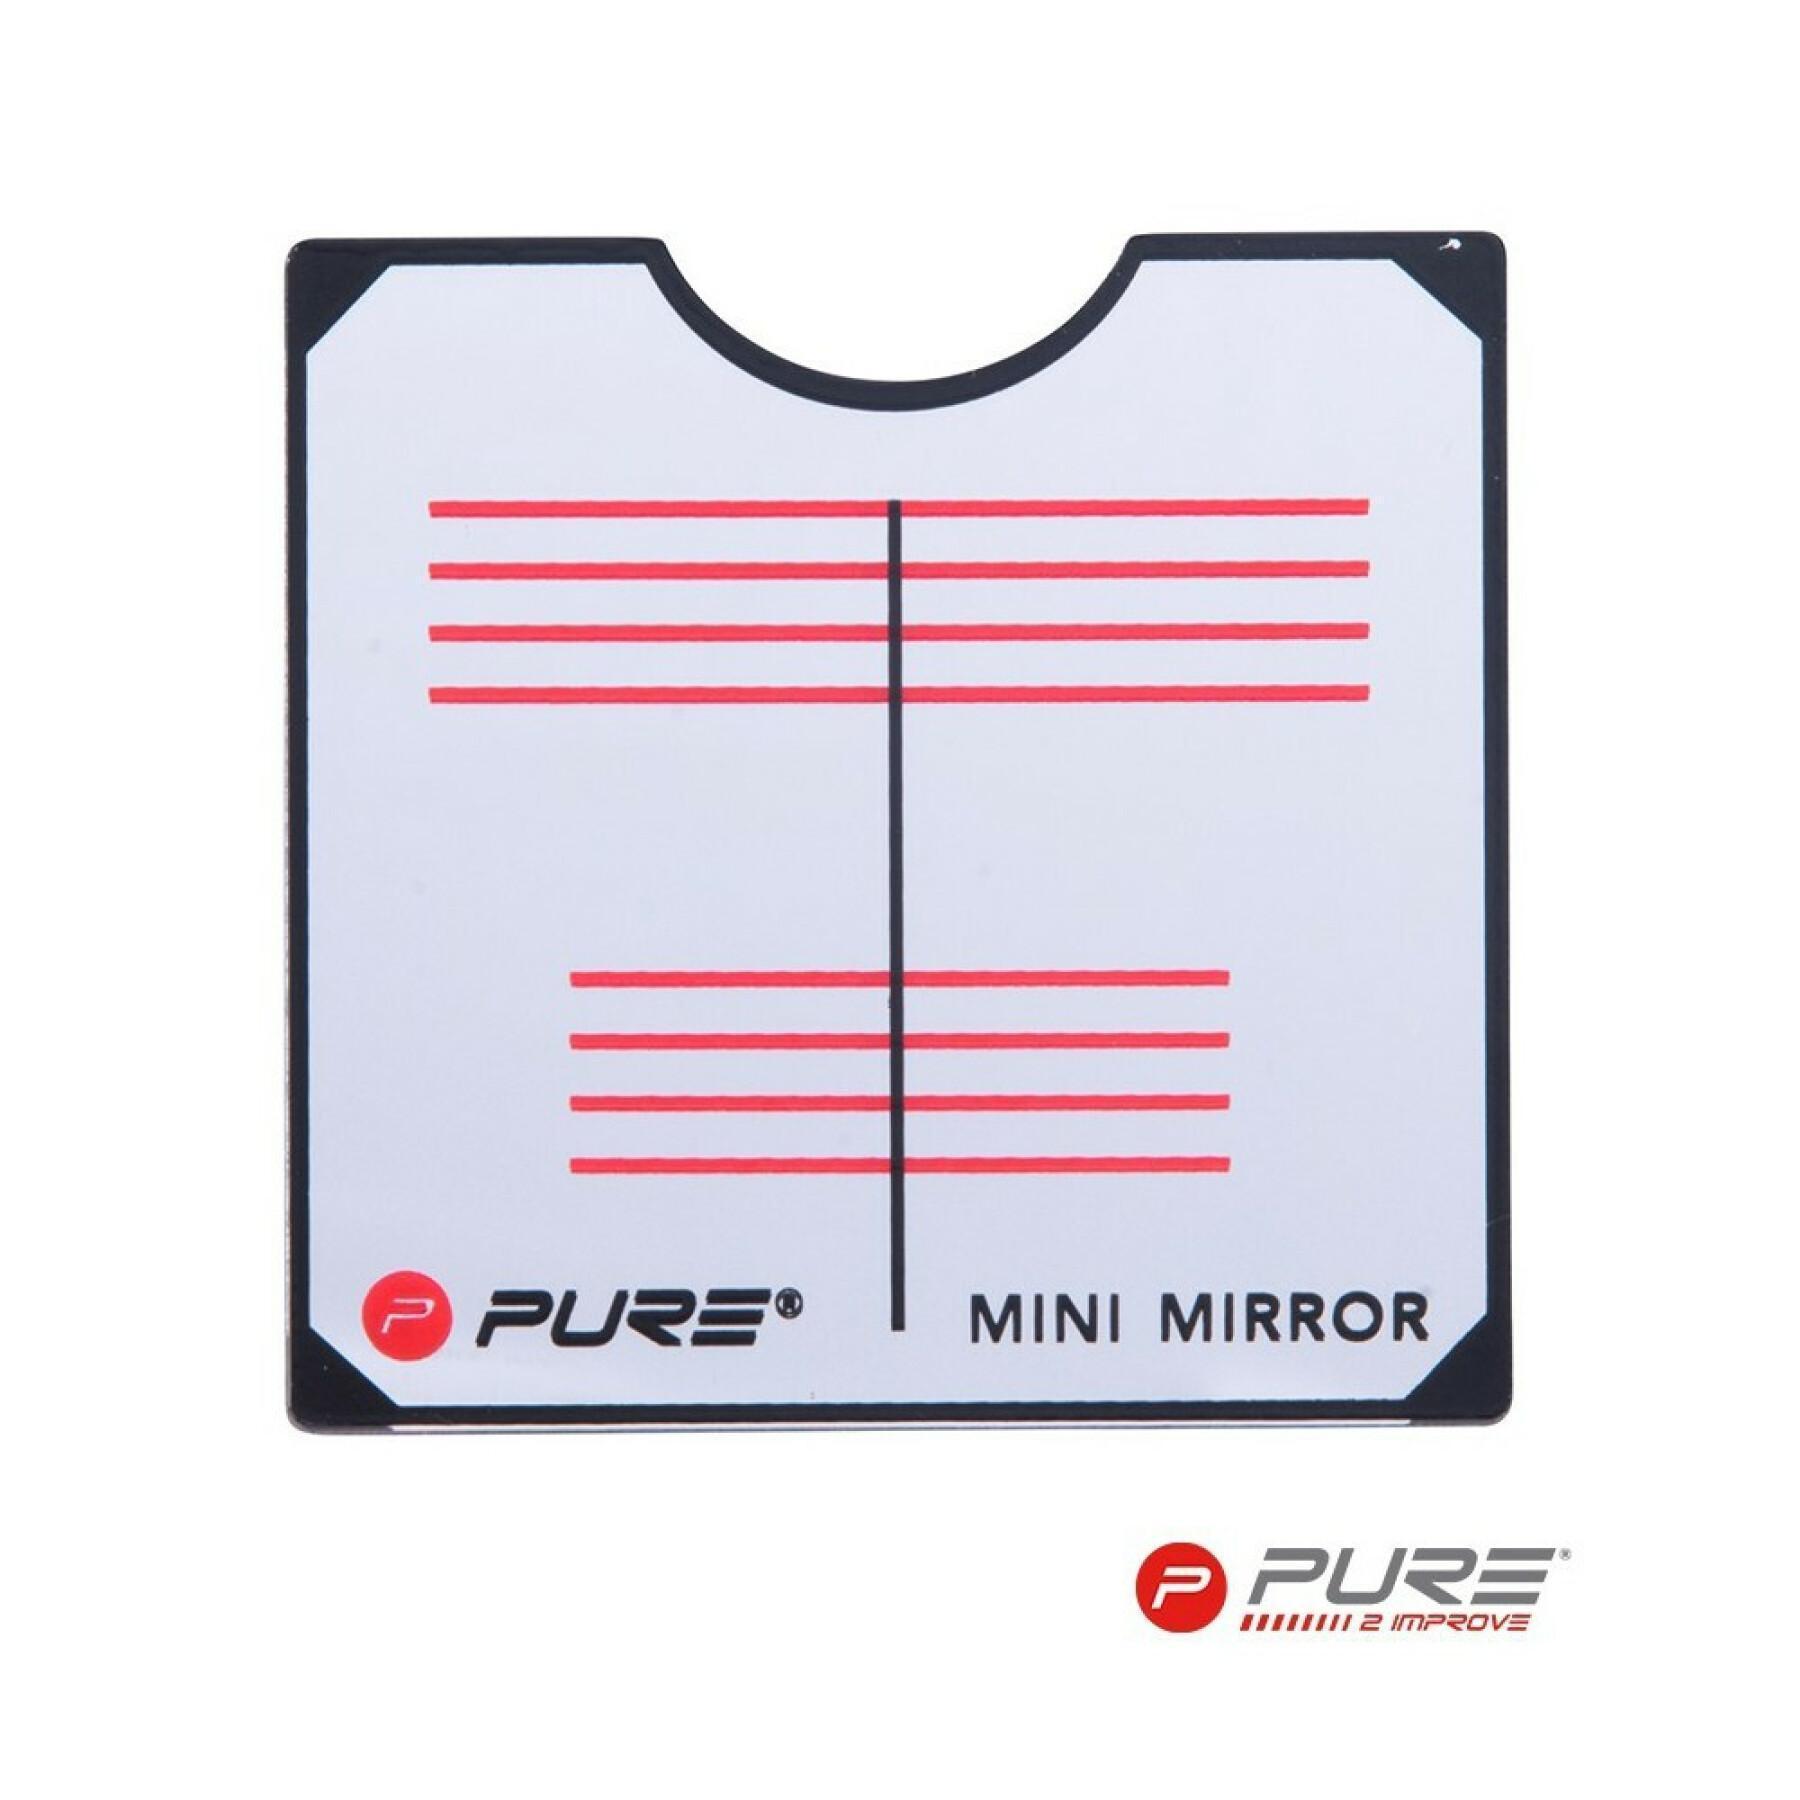 Mini miroir Pure2Improve 8cm